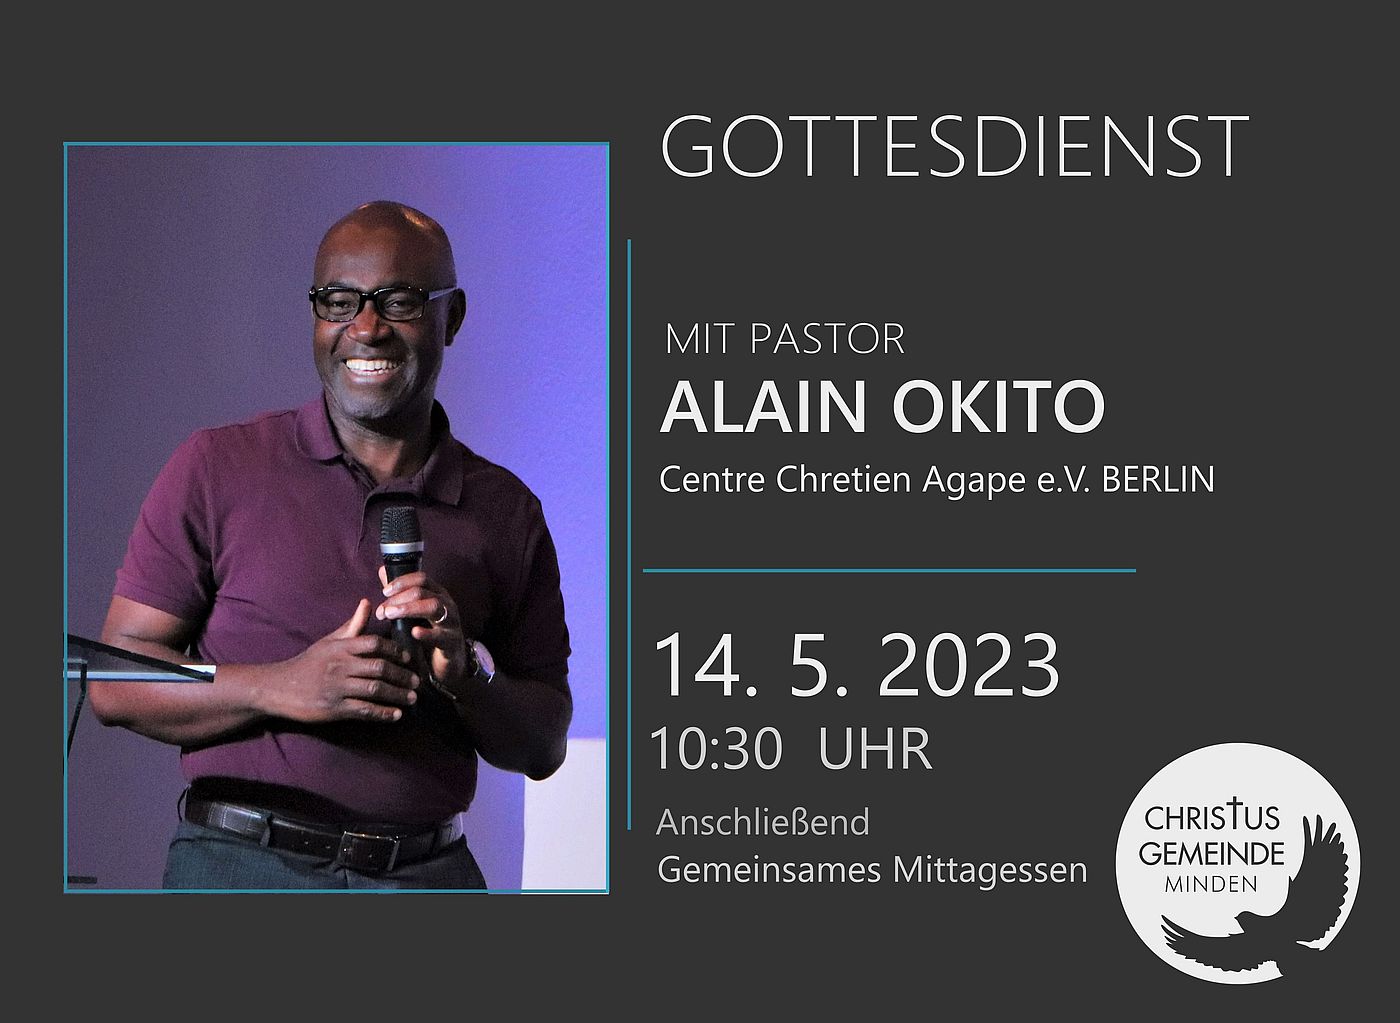 Gottesdienst mit Pastor Alain Okito aus Berlin